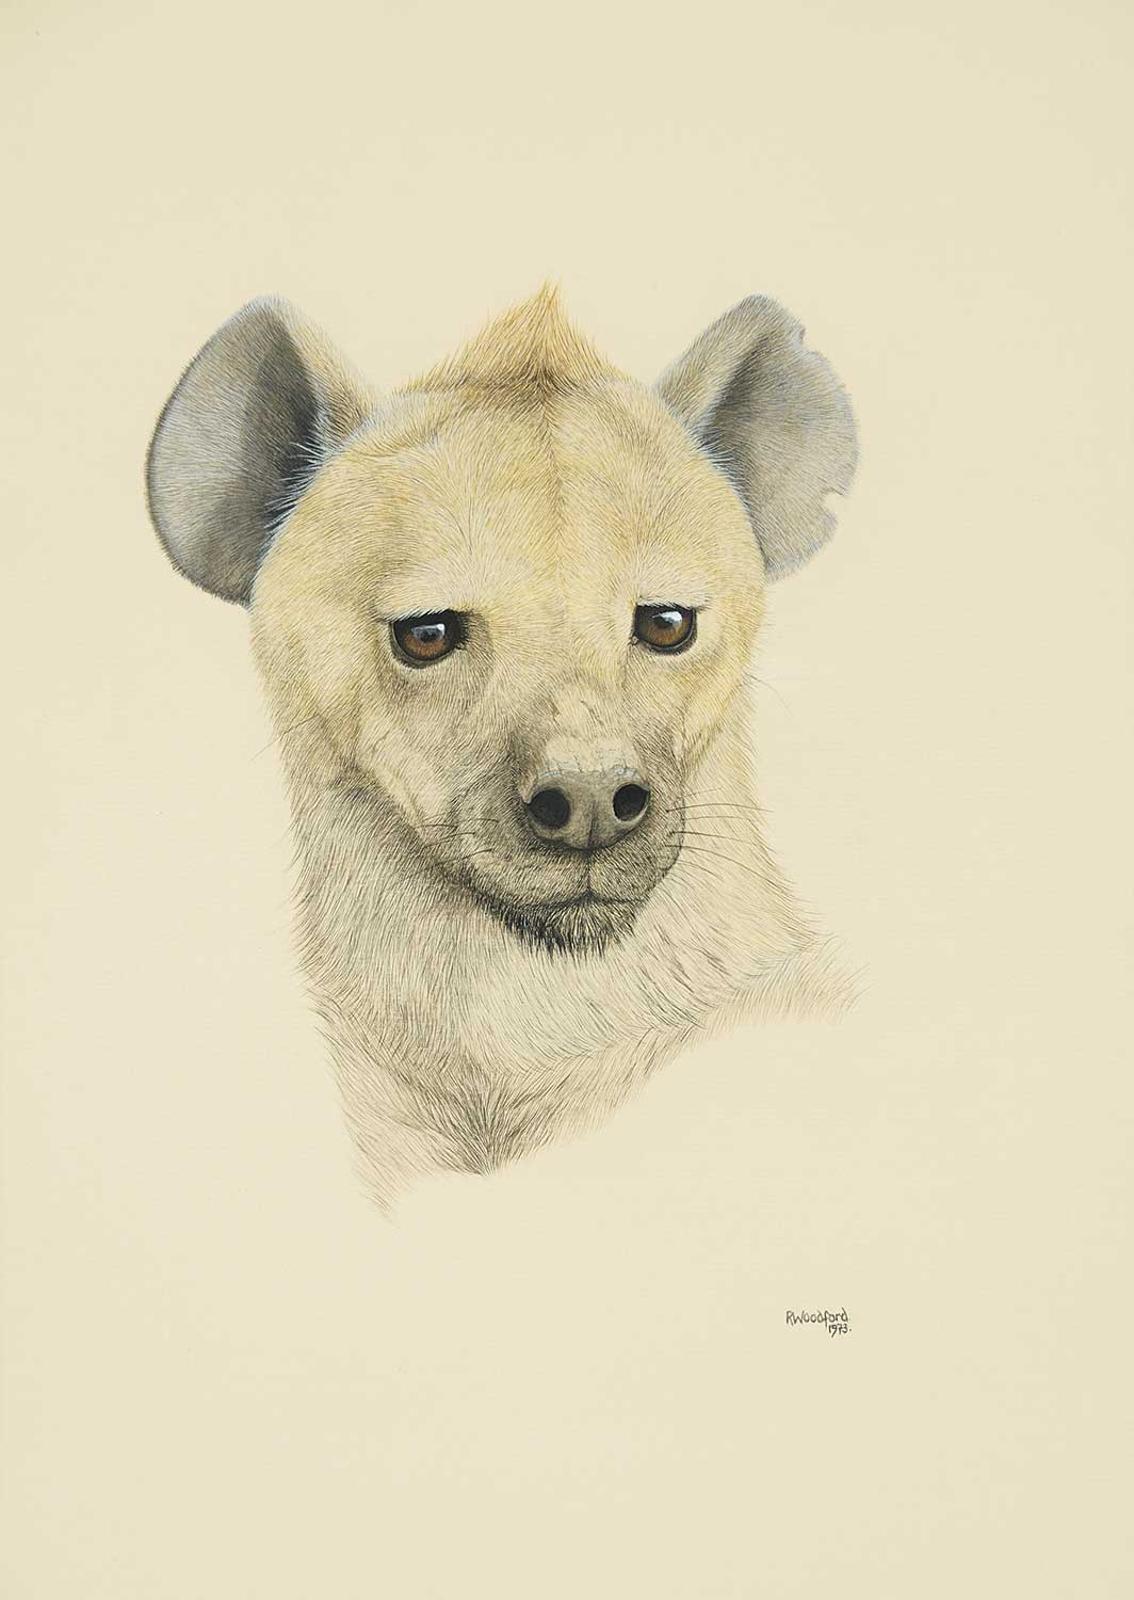 Rosemary Woodford - Untitled - Hyena Head